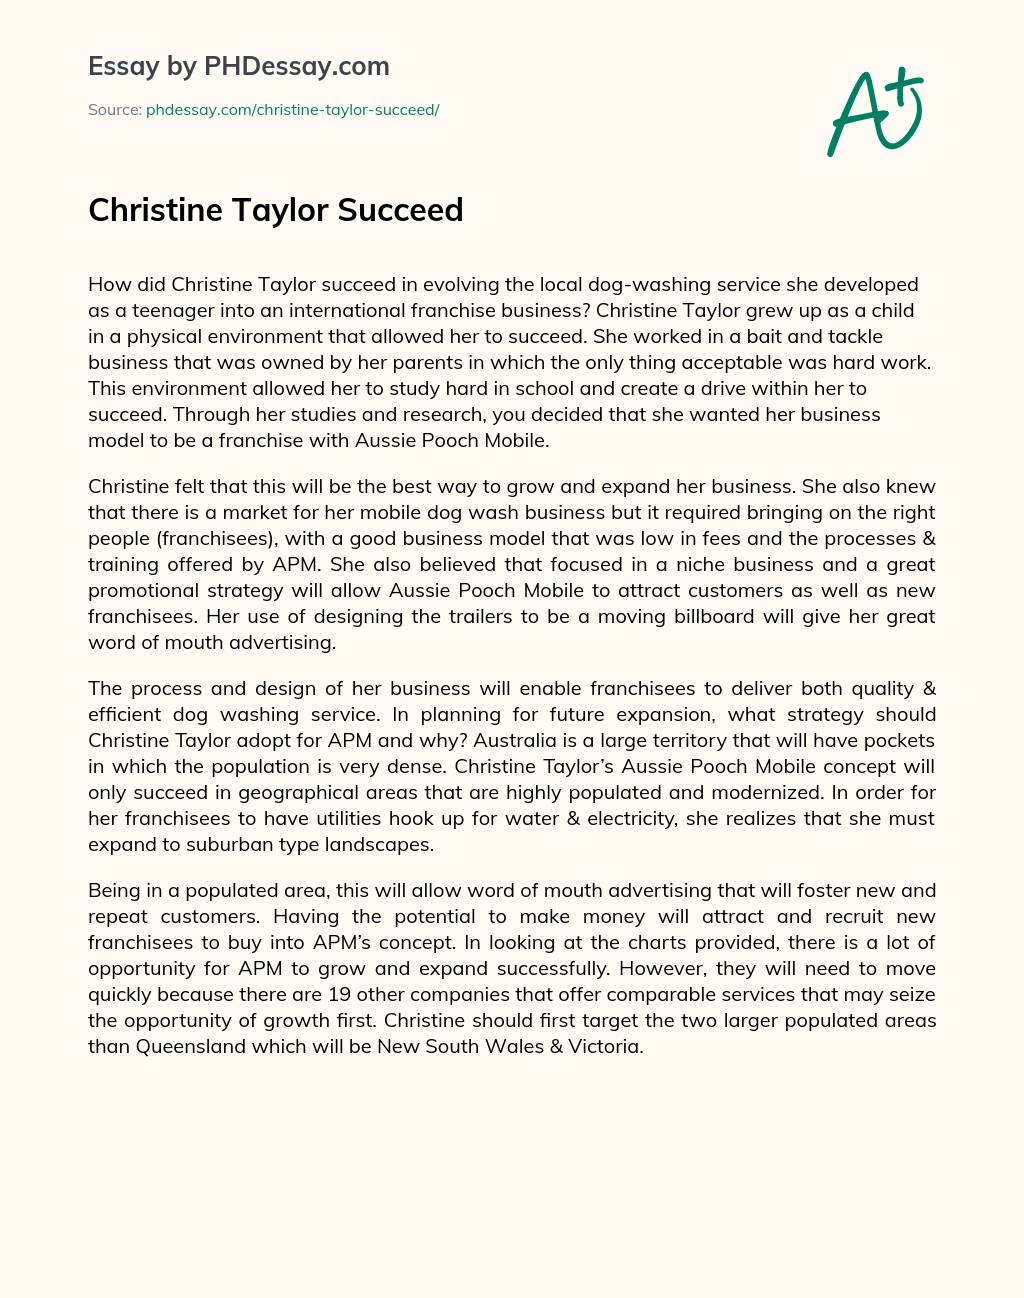 Christine Taylor Succeed essay